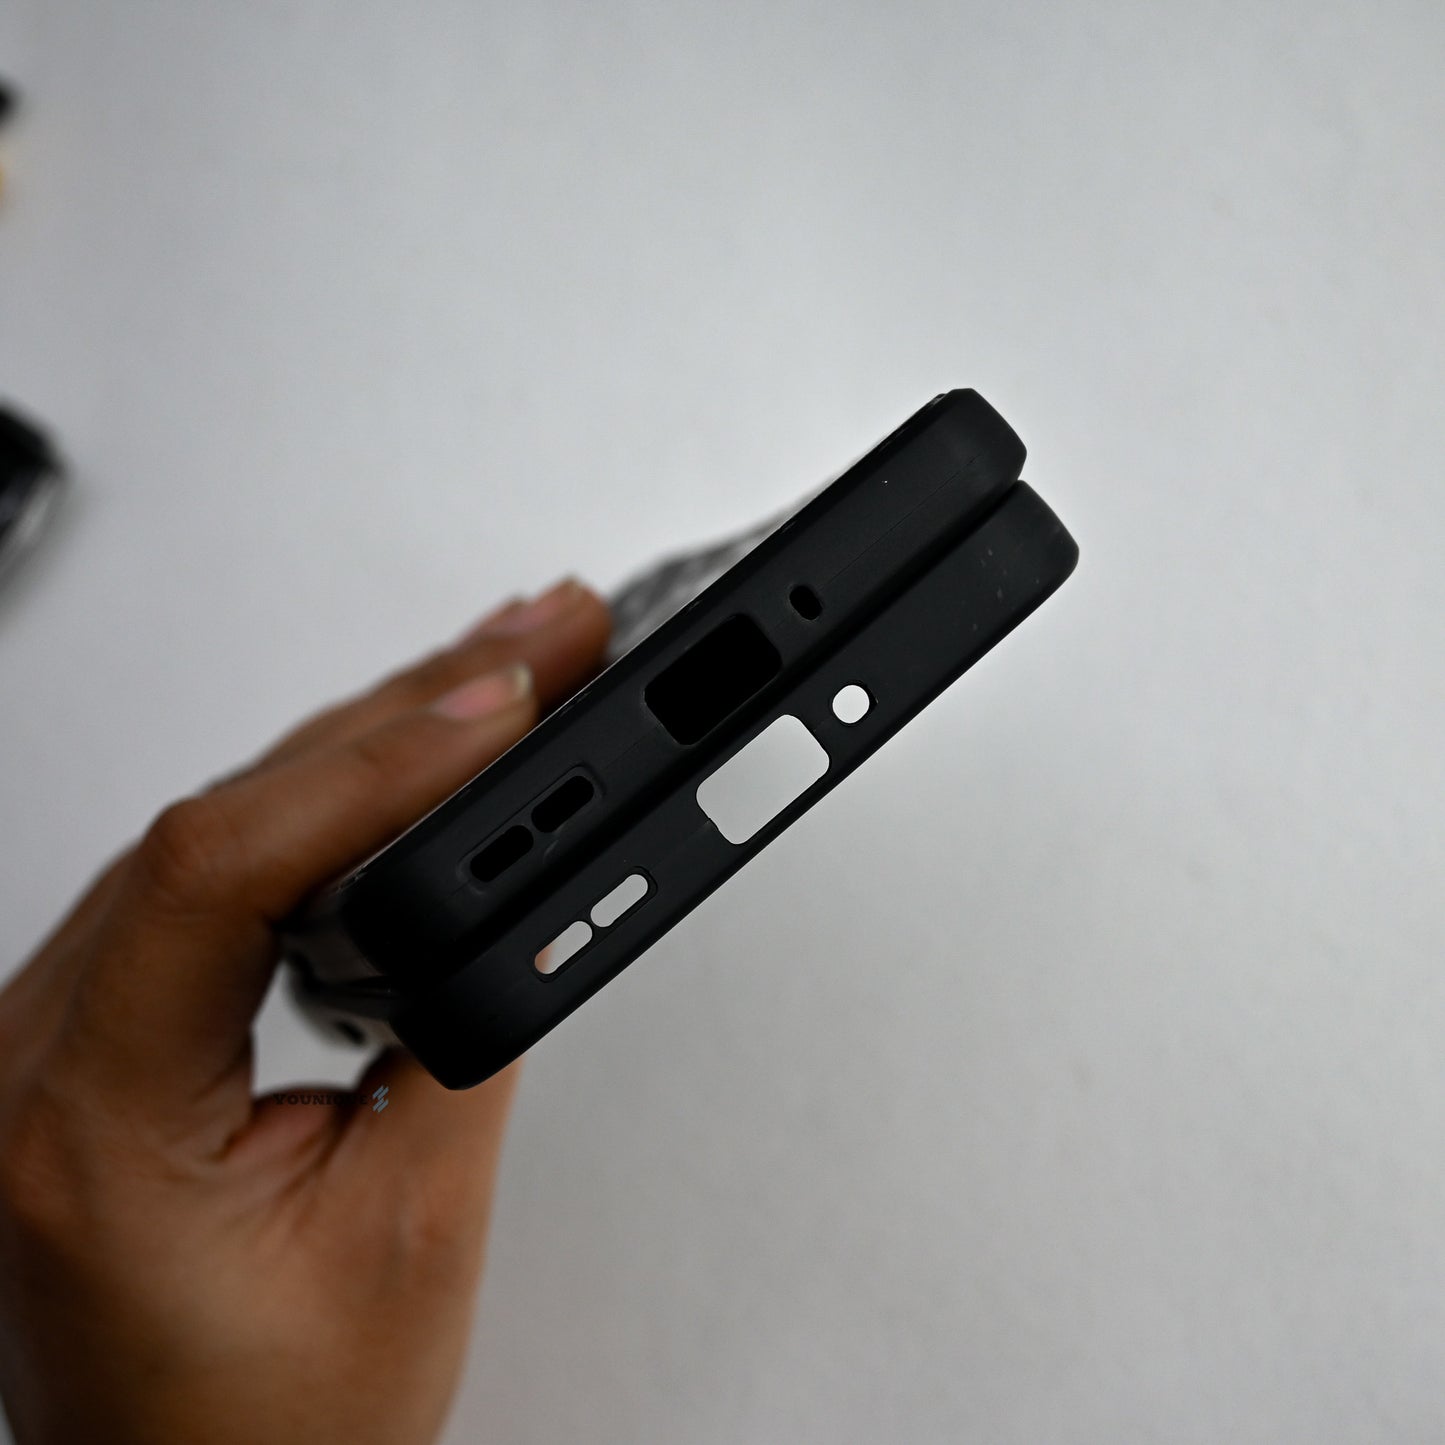 Cosmic Design Textured Soft Silicone Case - OnePlus (Buy 1 Get 1)